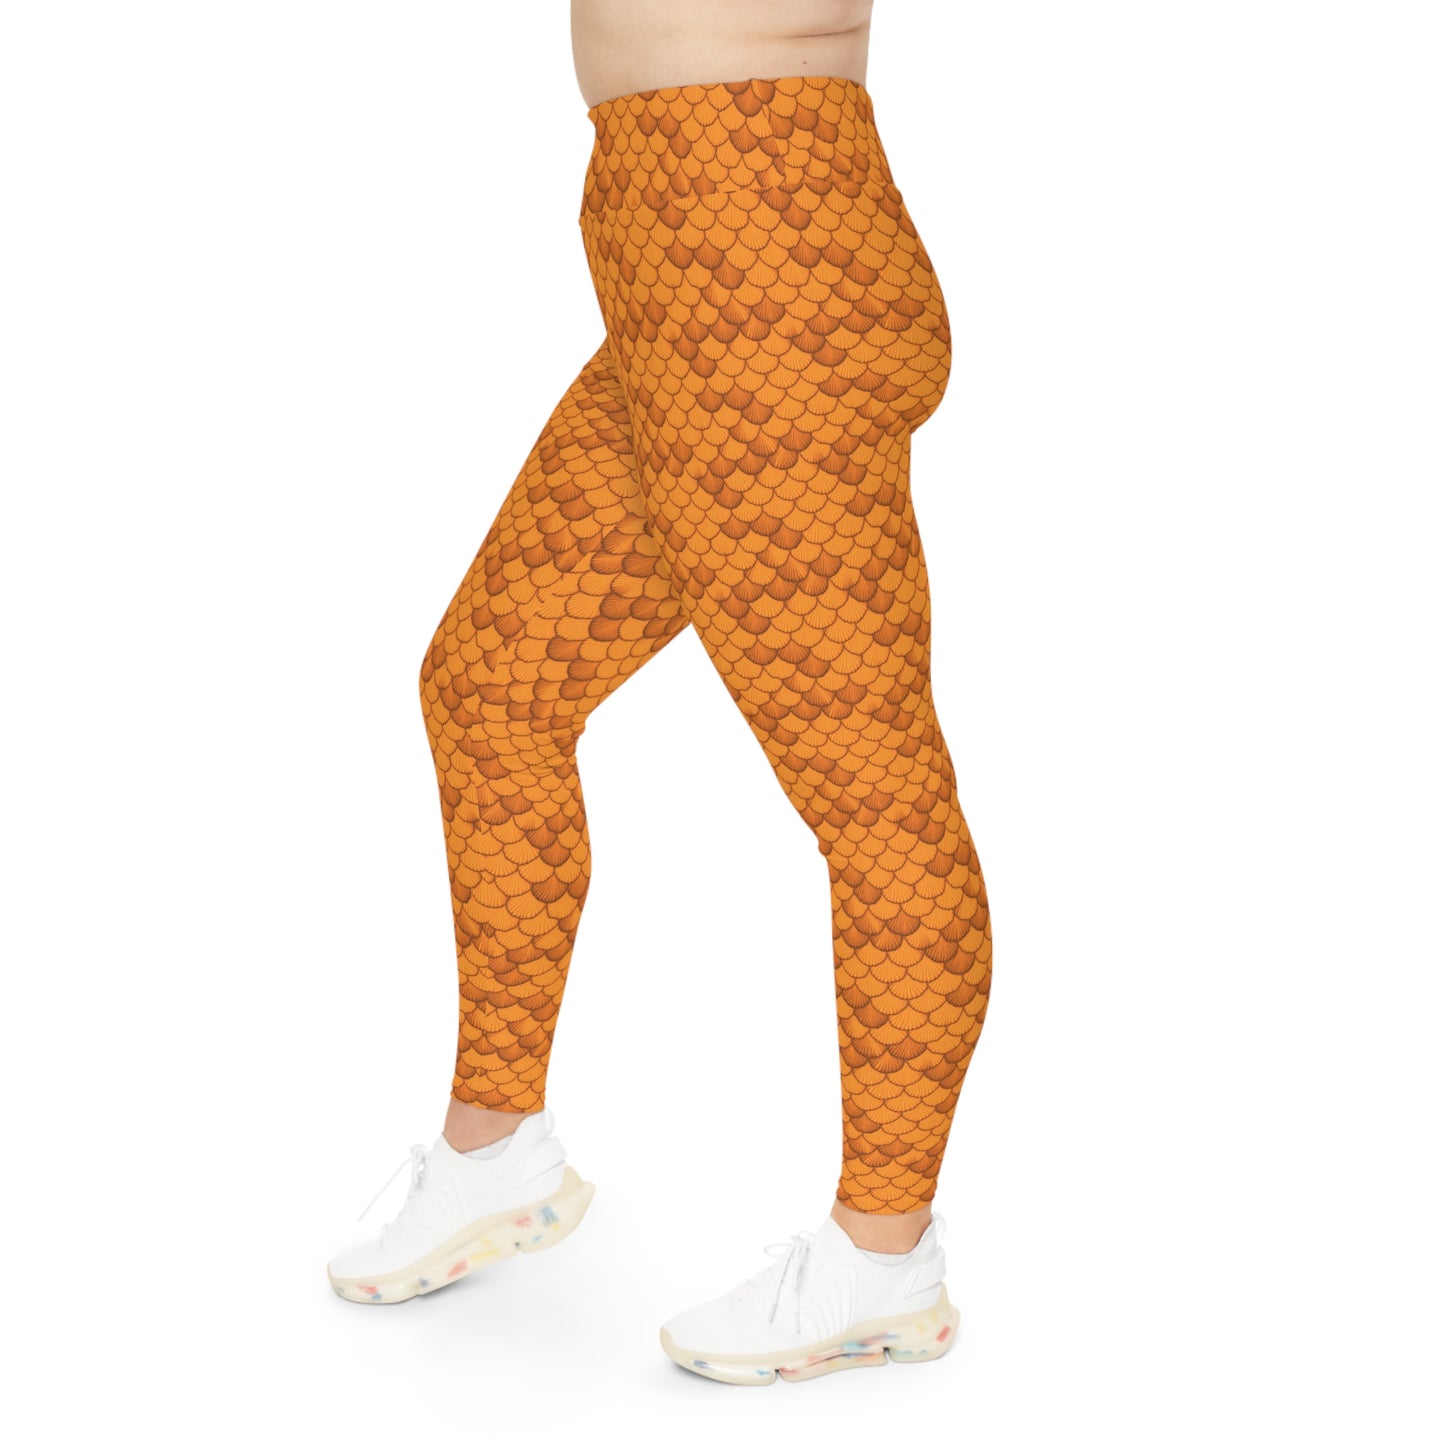 High Waisted Plus Size Leggings - Orange Seashell Mermaid Inspired - Ocean Magical Mystical Design - 4-Way Stretch, High-Rise Waistband, UPF 50+